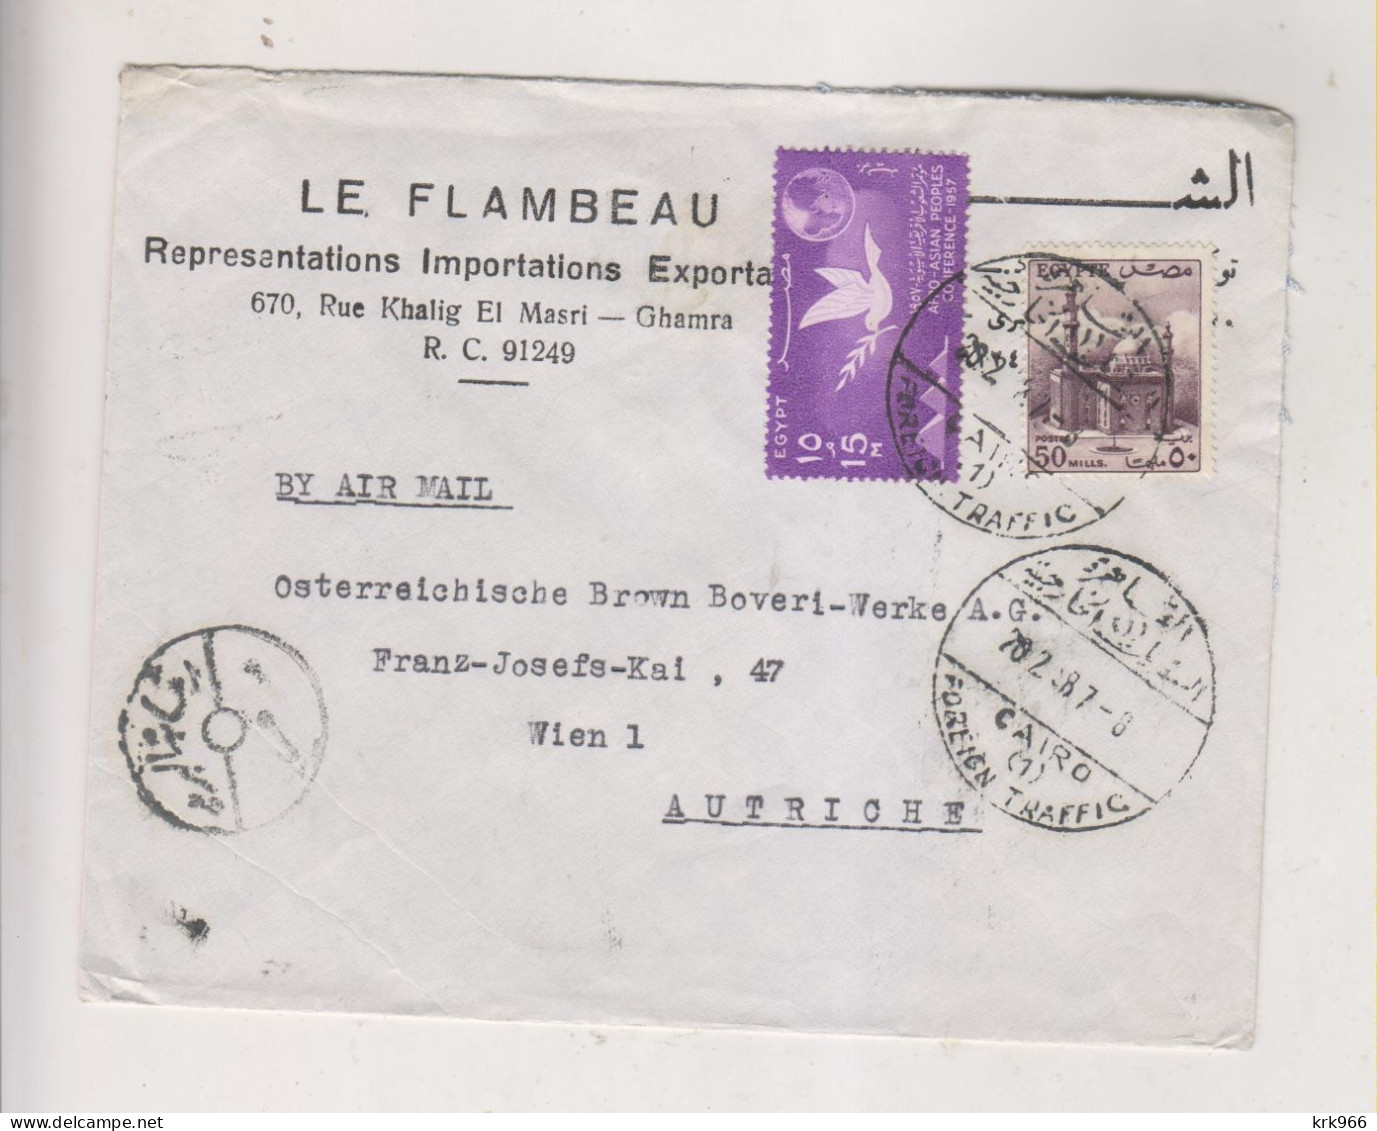 EGYPT CAIRO 1958  Airmail Cover To Austria - Poste Aérienne